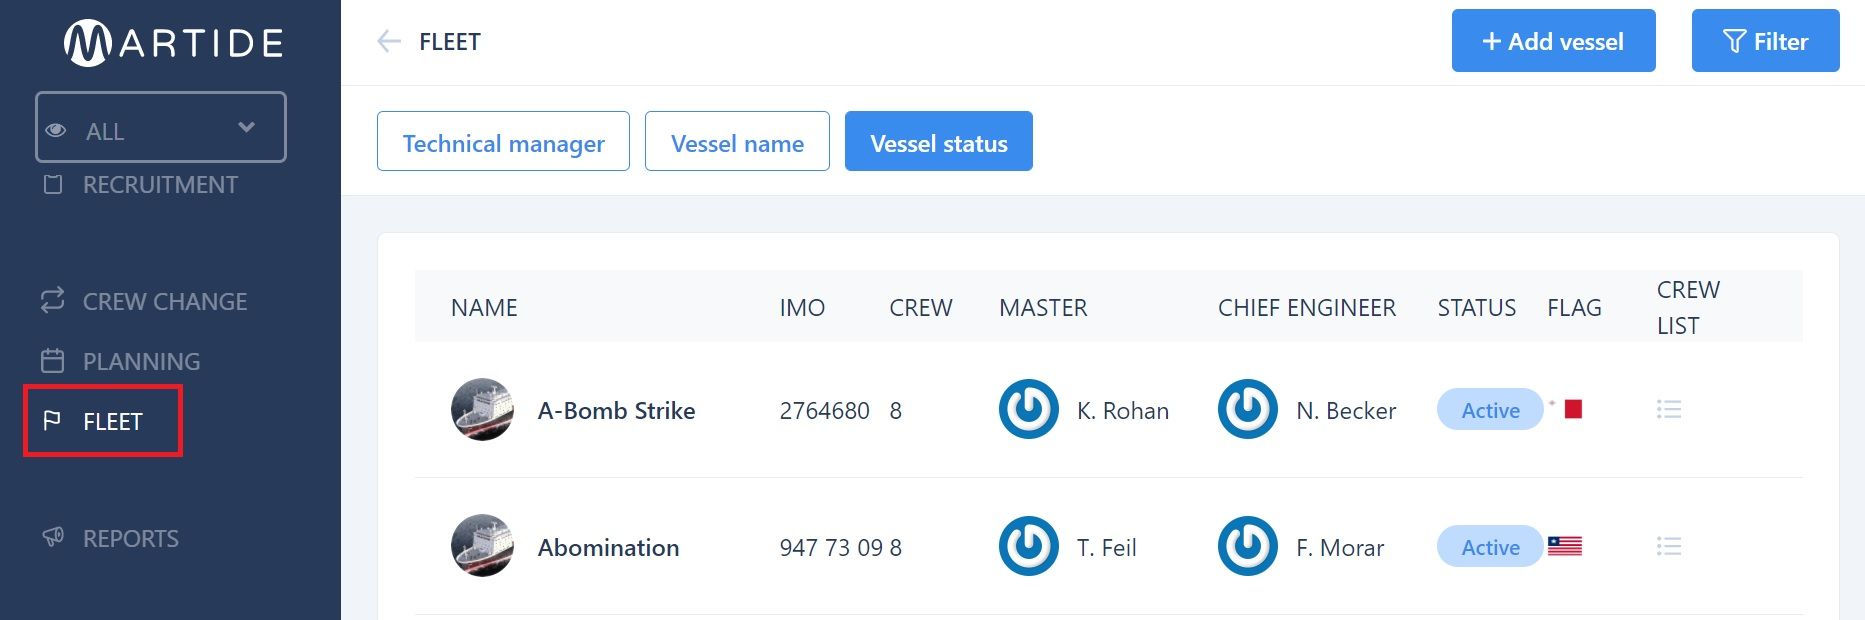 Screenshot of Martide's maritime recruitment and maritime crew management system software